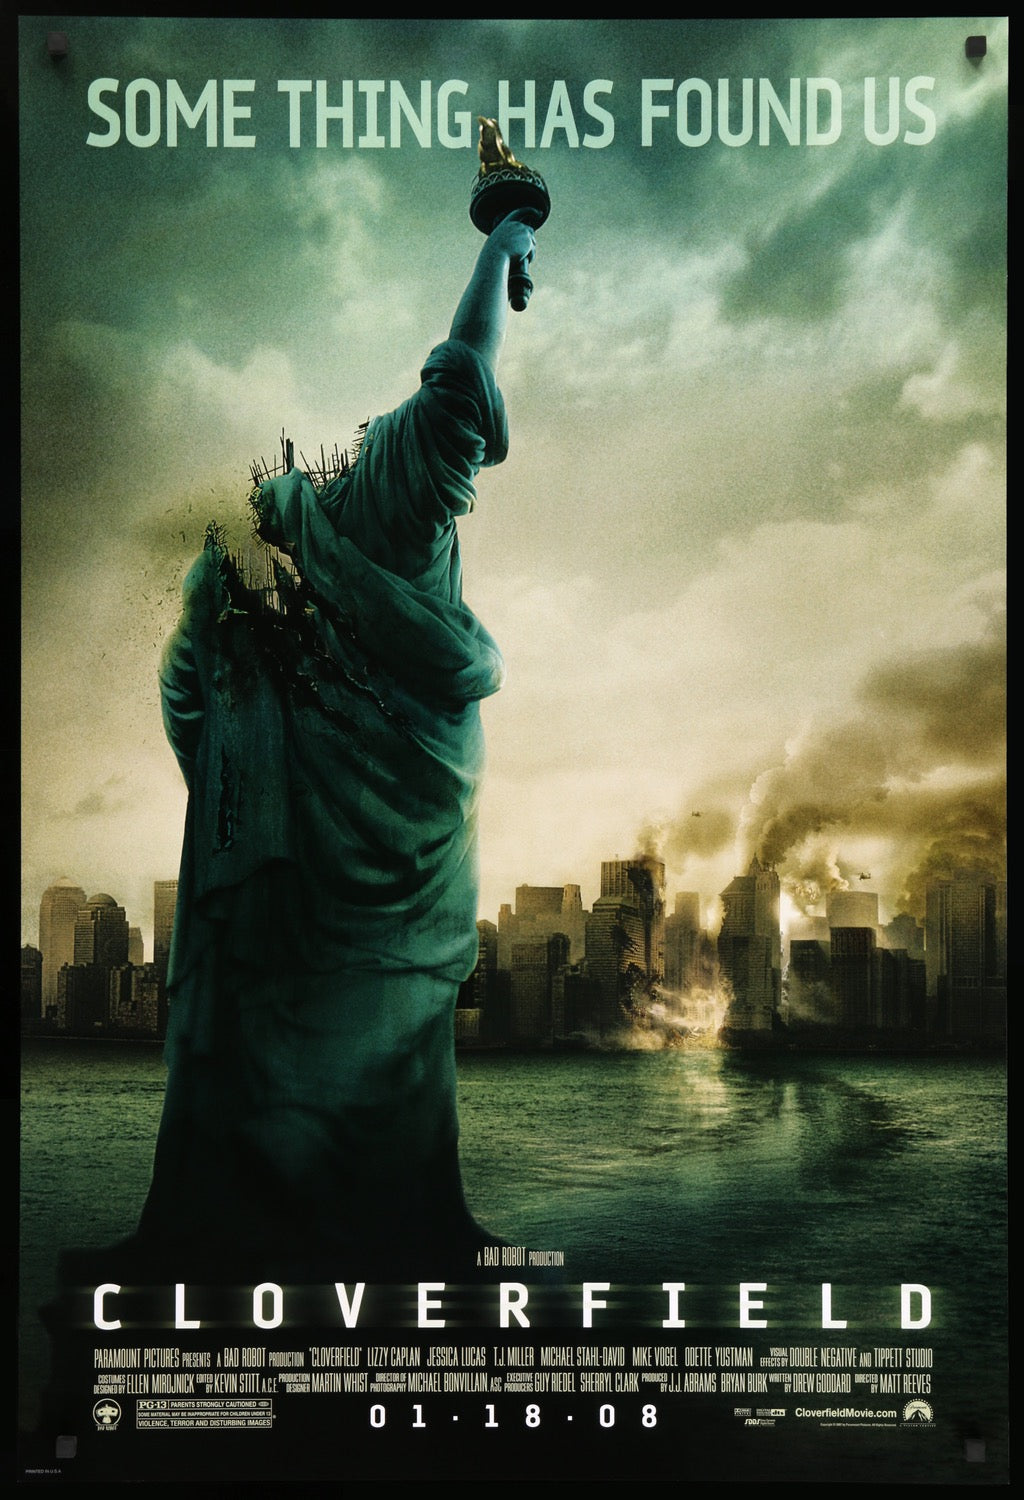 Cloverfield (2008) original movie poster for sale at Original Film Art